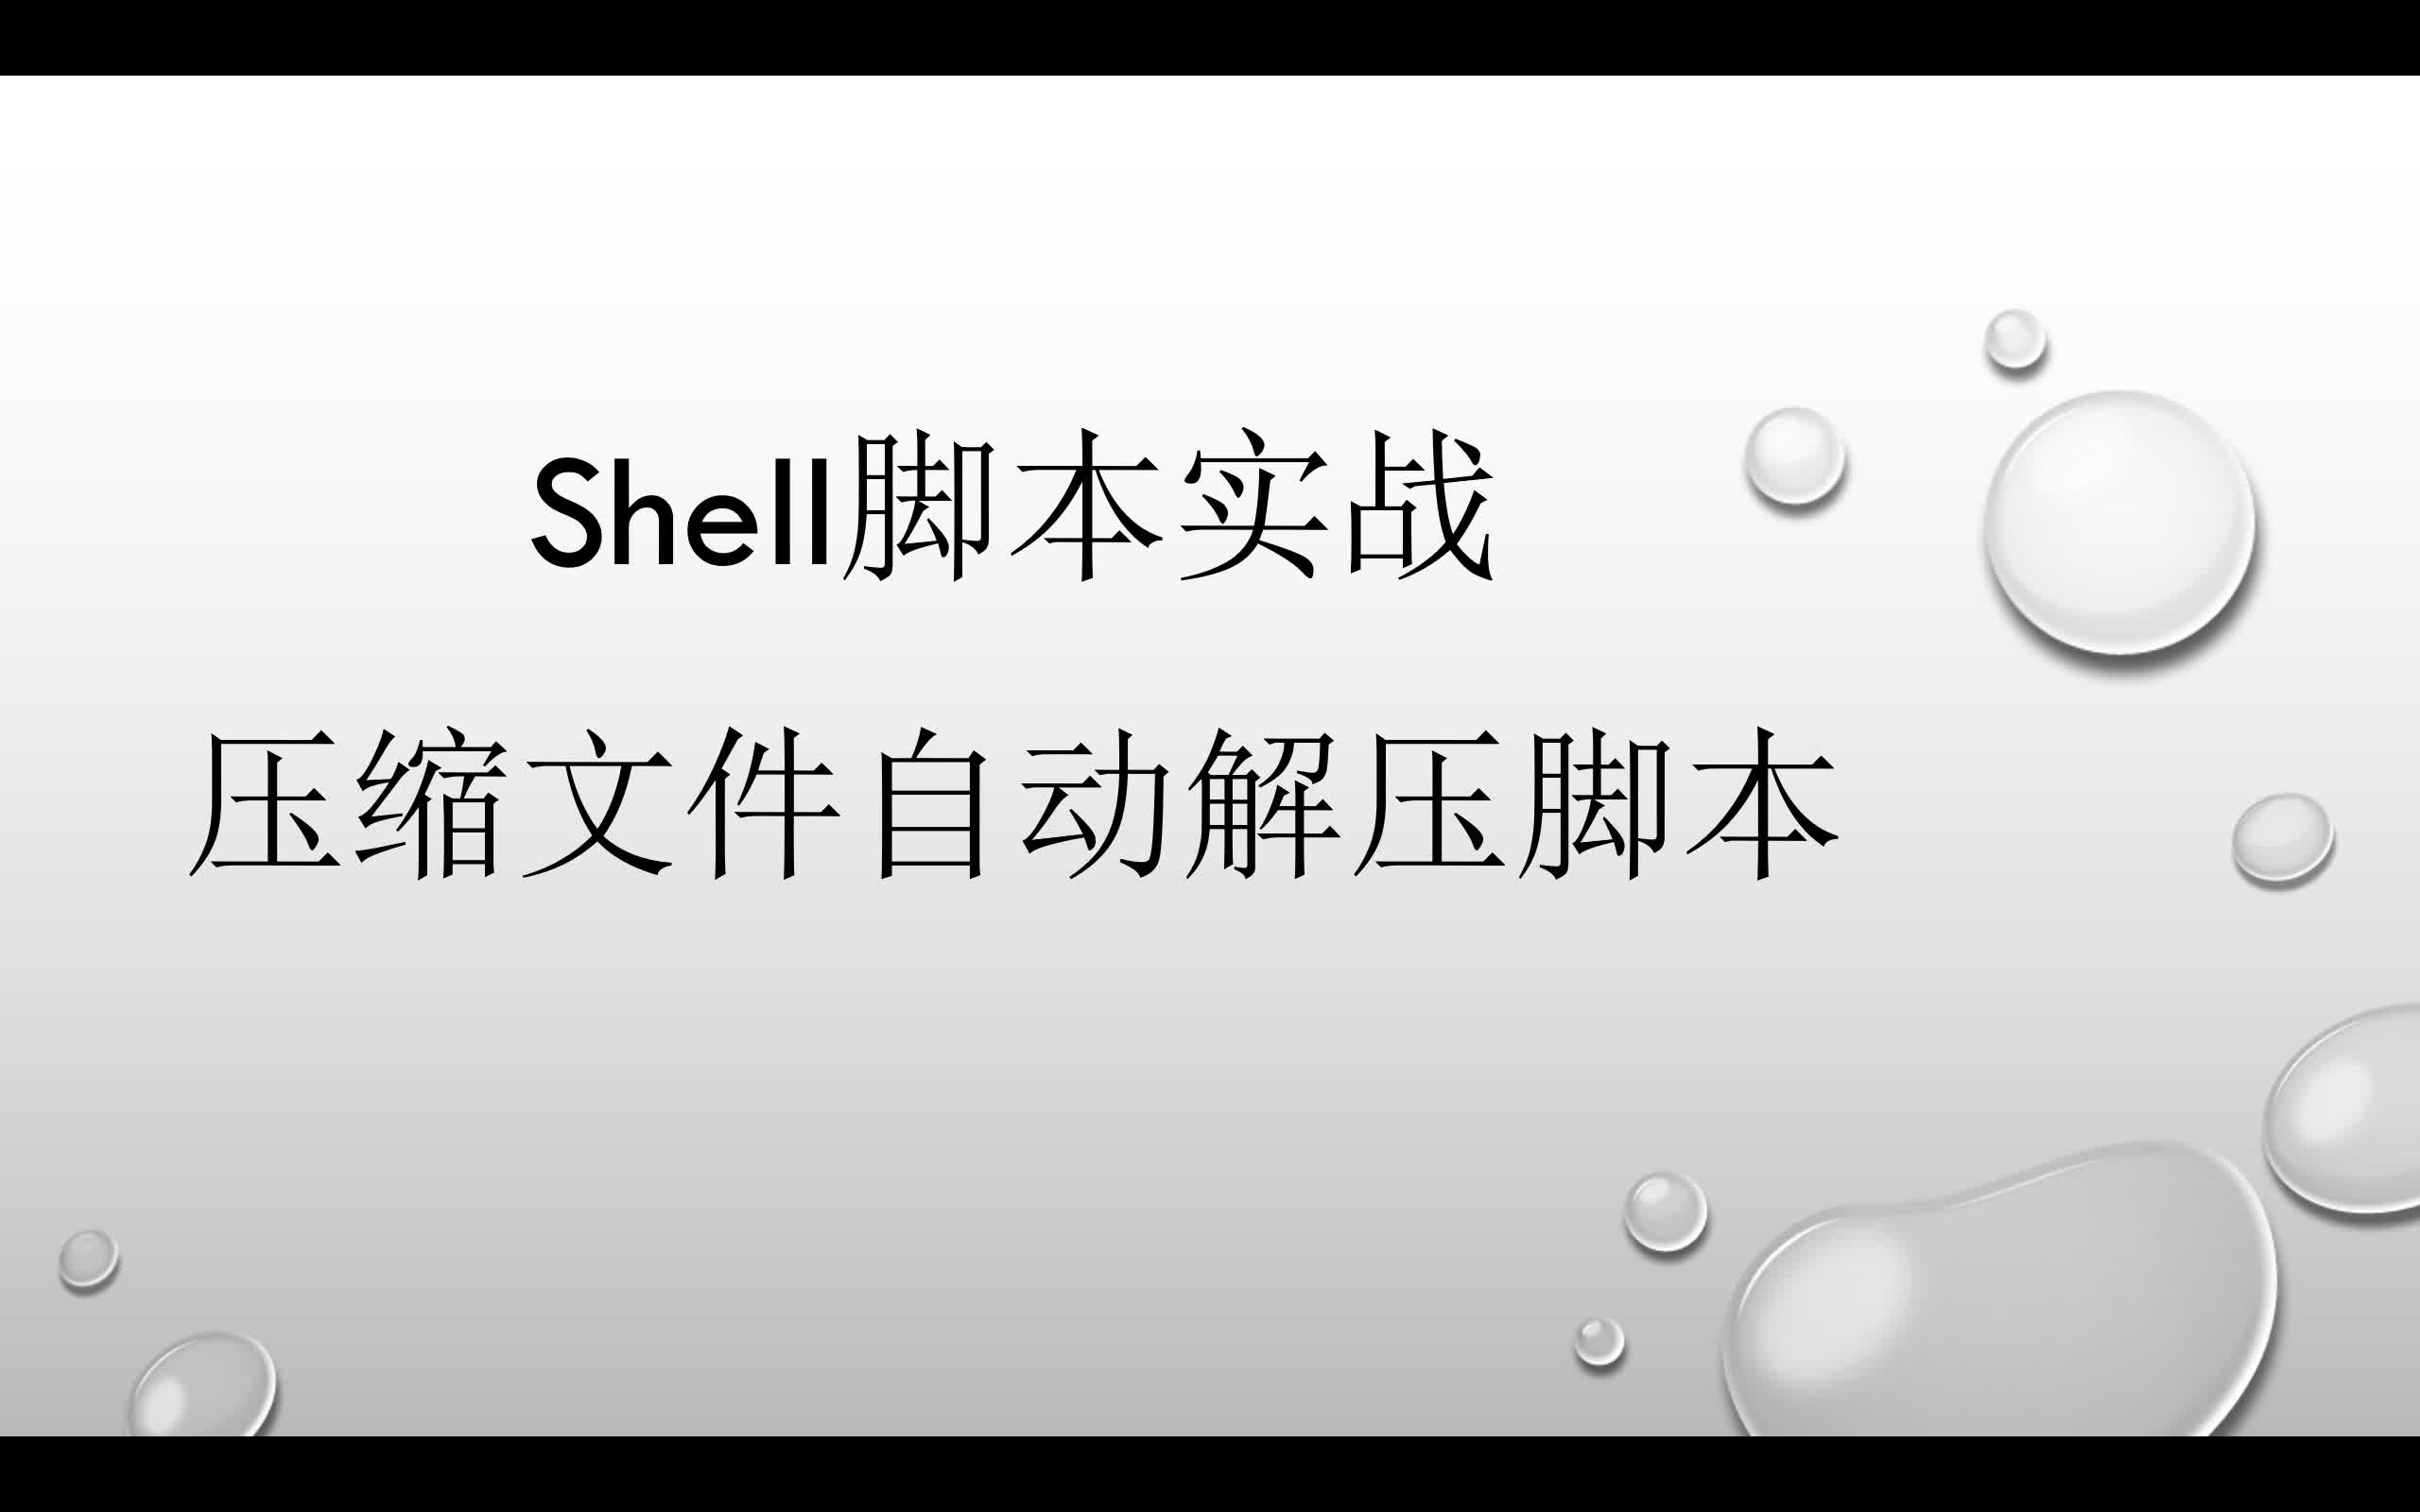 Linux Shell脚本实战-压缩文件自动解压脚本